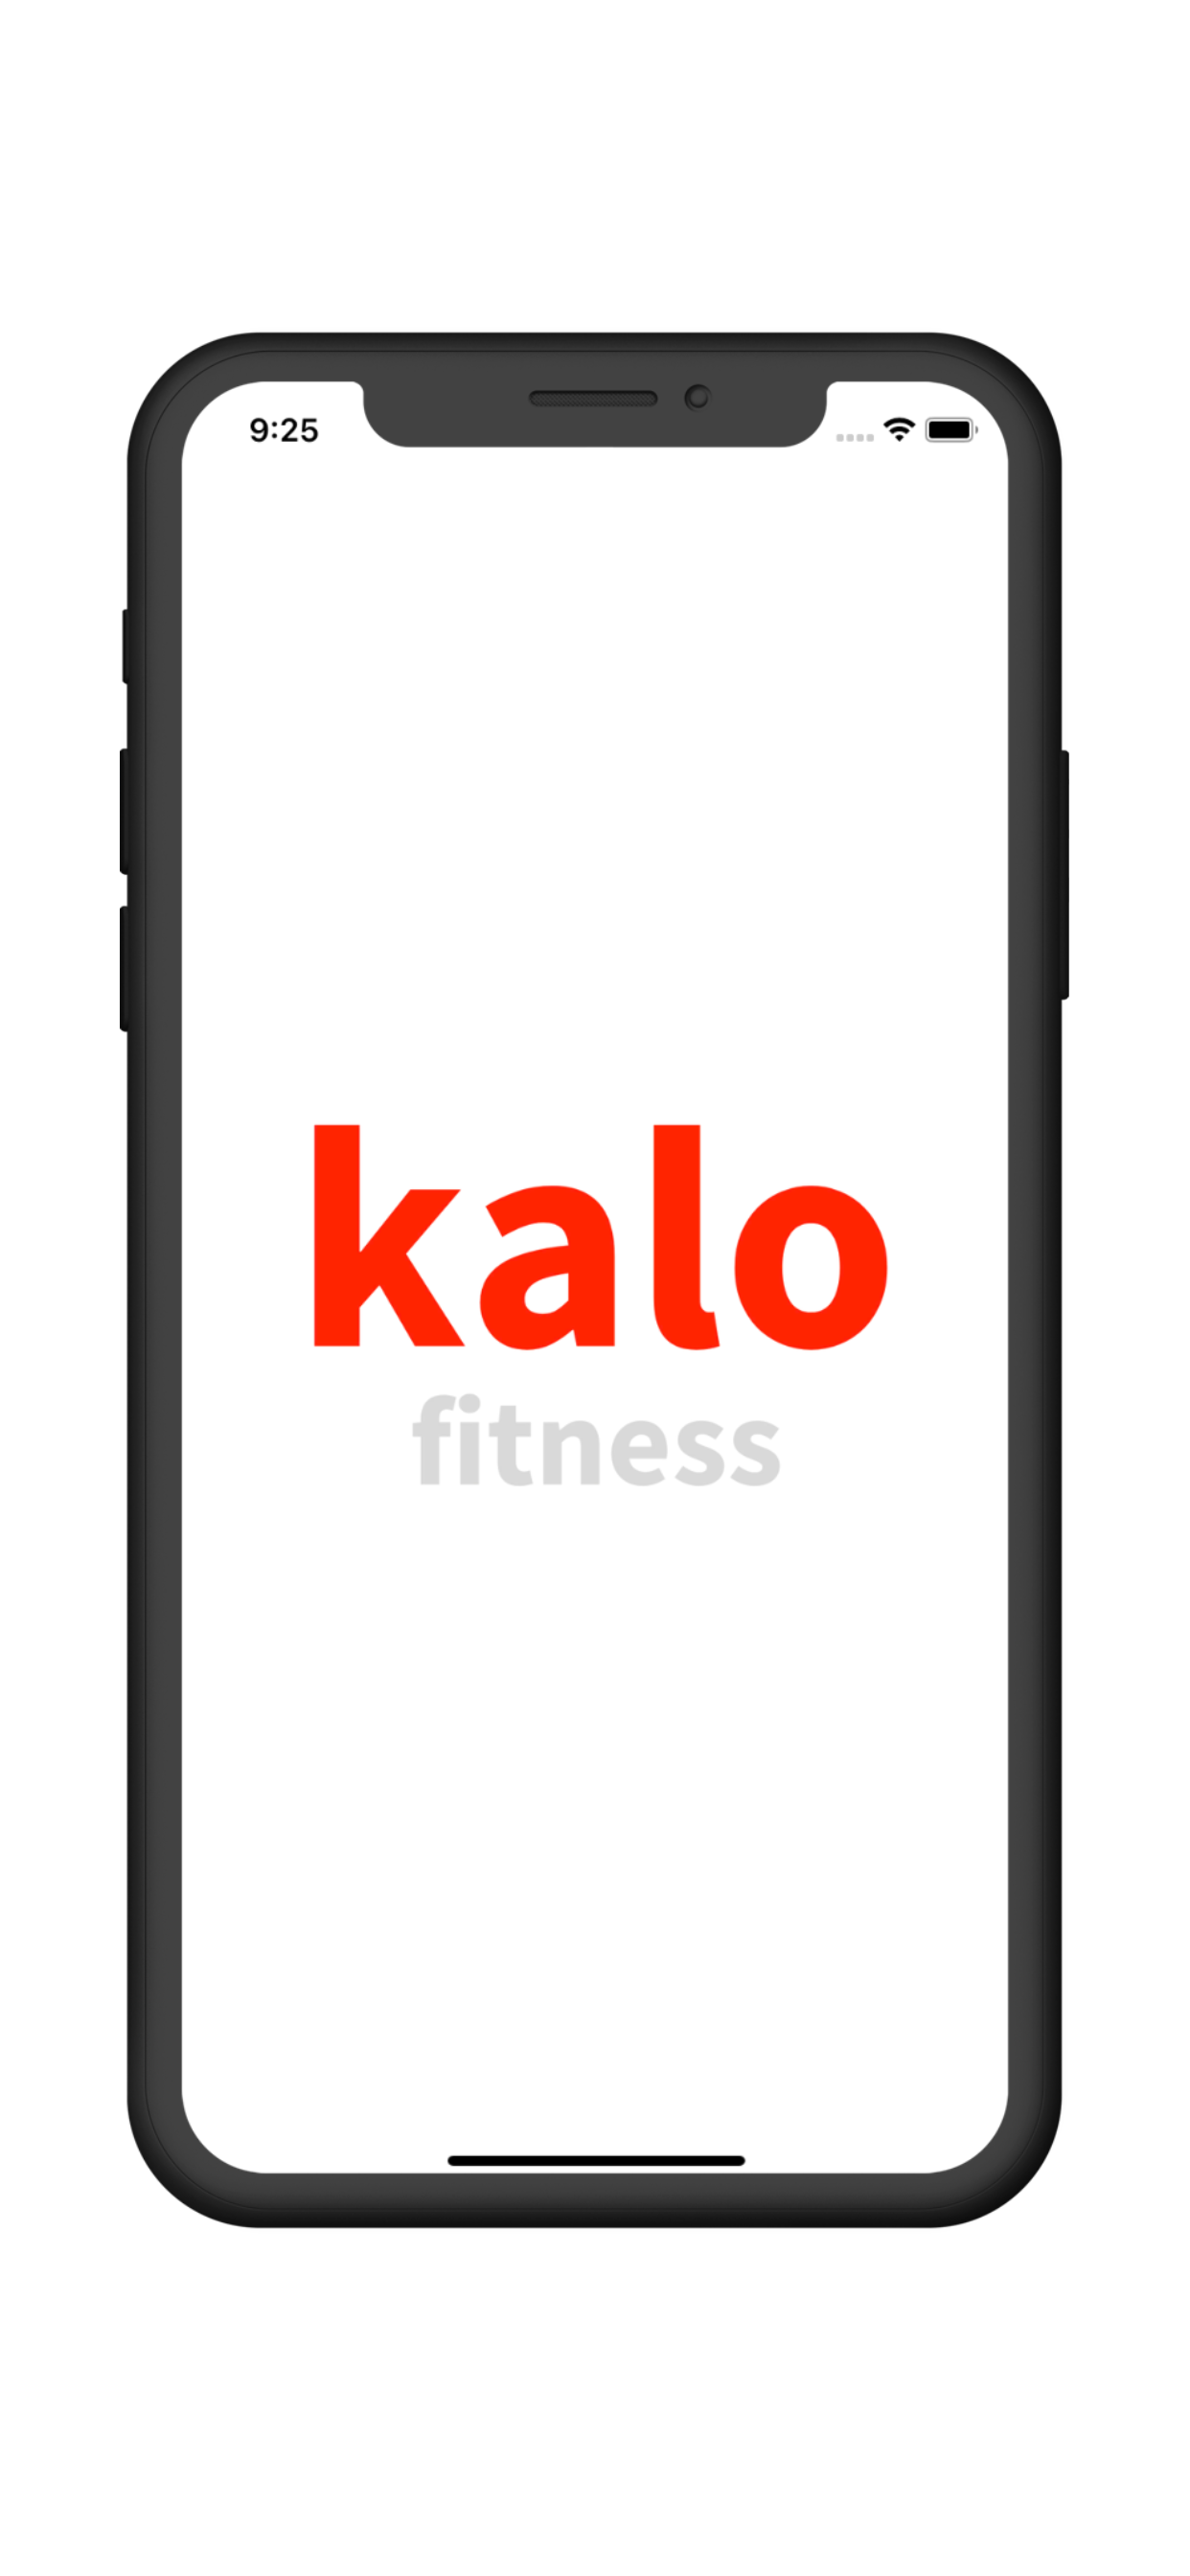 kalo fitness app splash screen